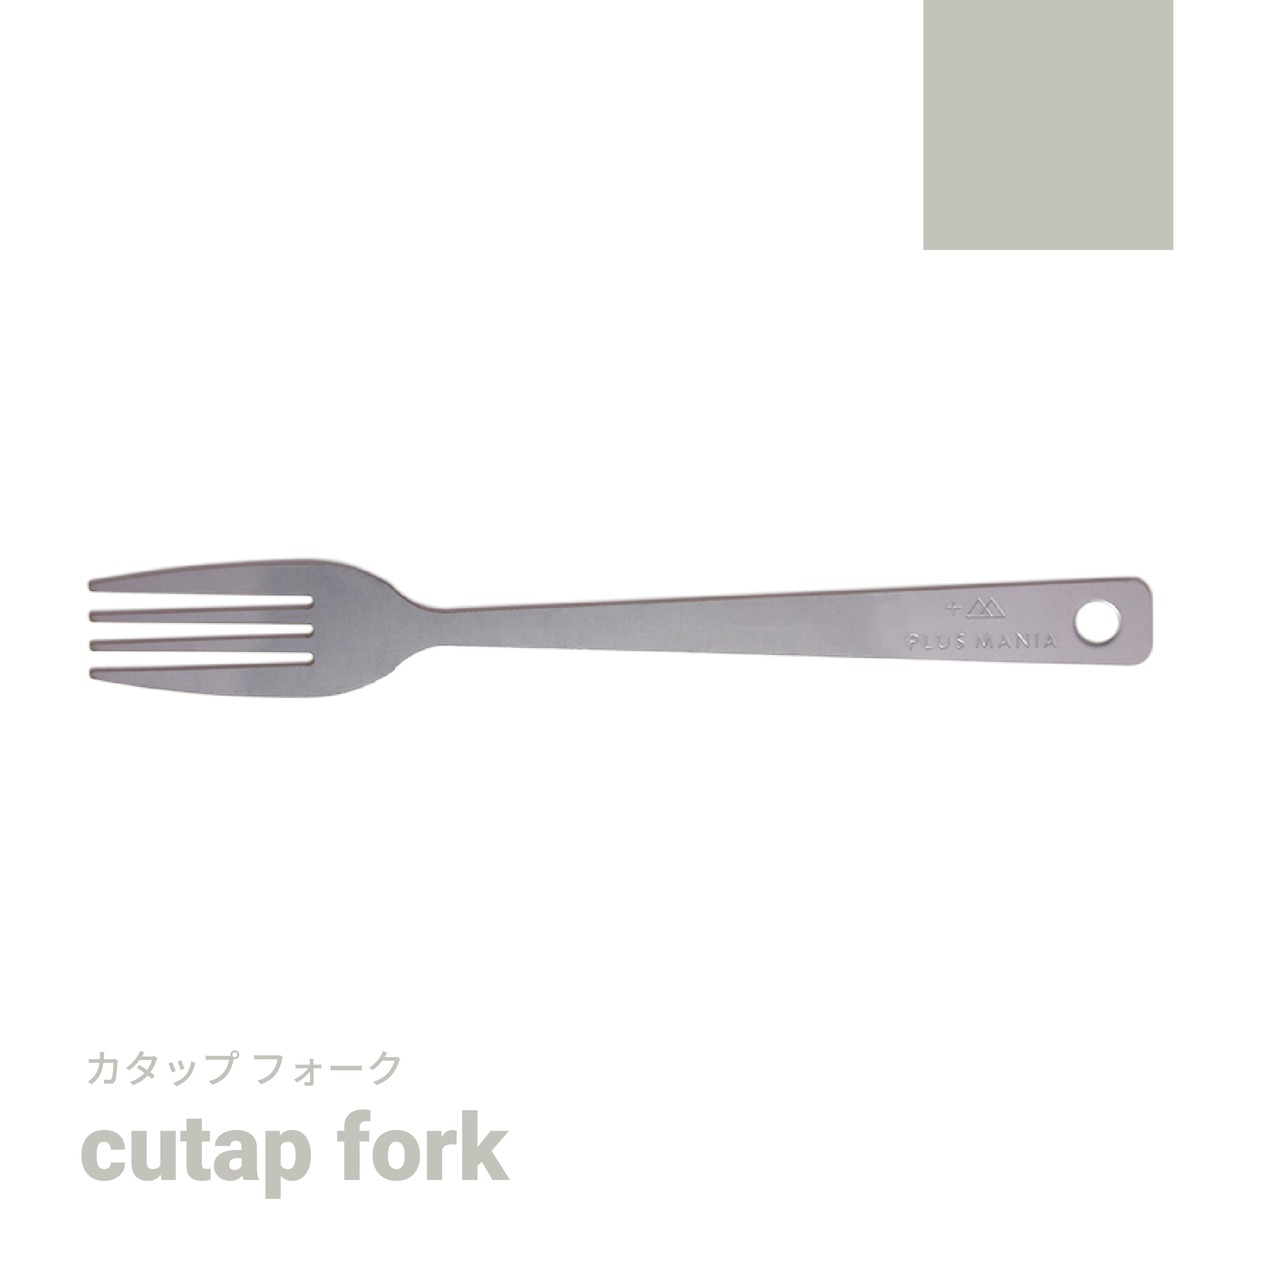 cutap fork [カタップフォーク]